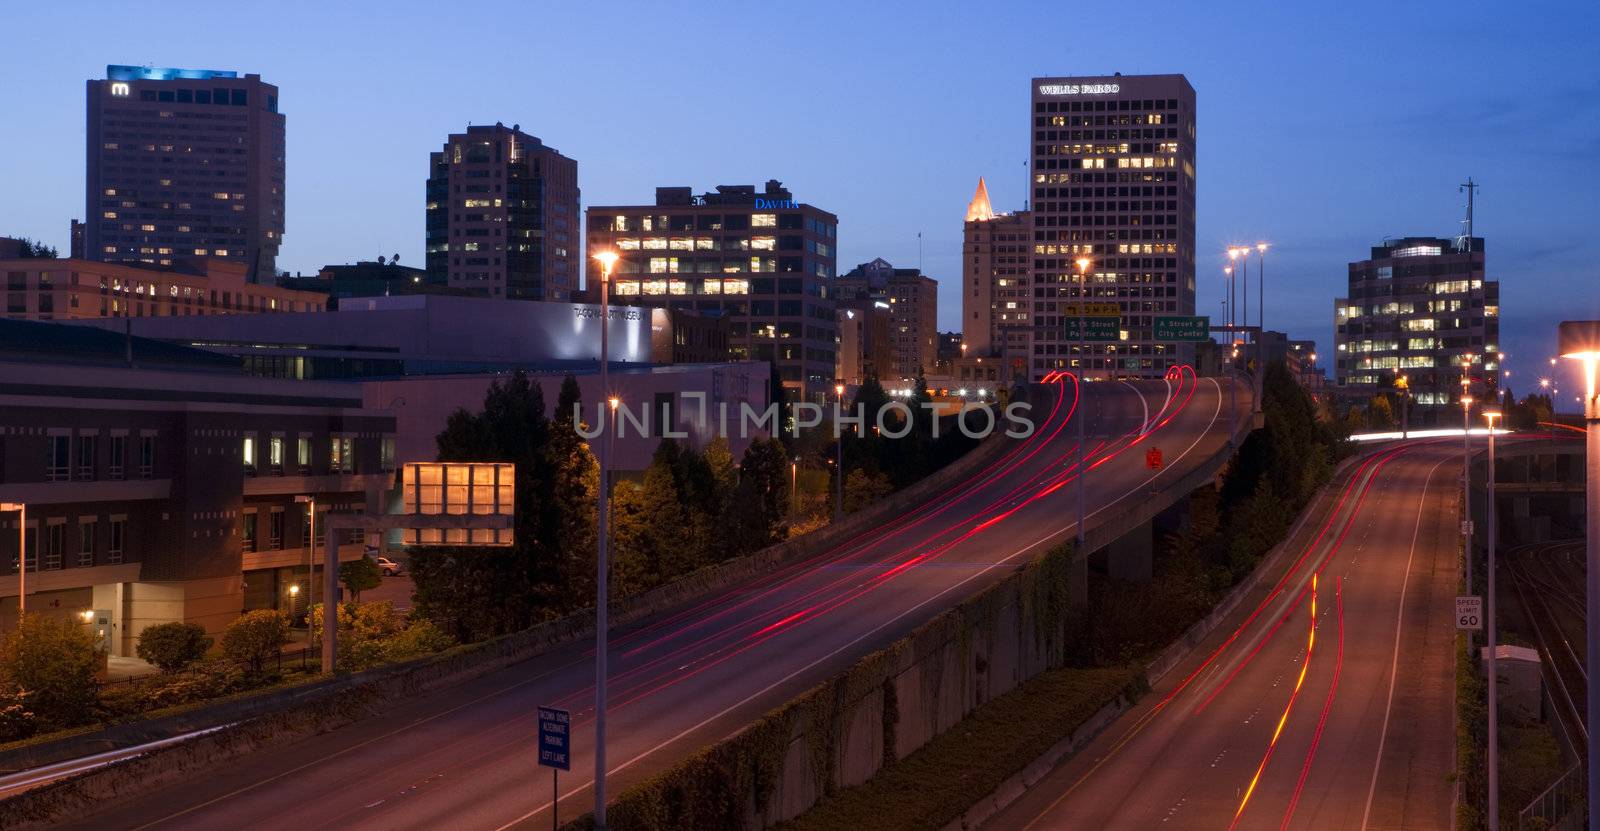 Interstate 705 City Center Tacoma Washington Skyline ay Dusk by ChrisBoswell